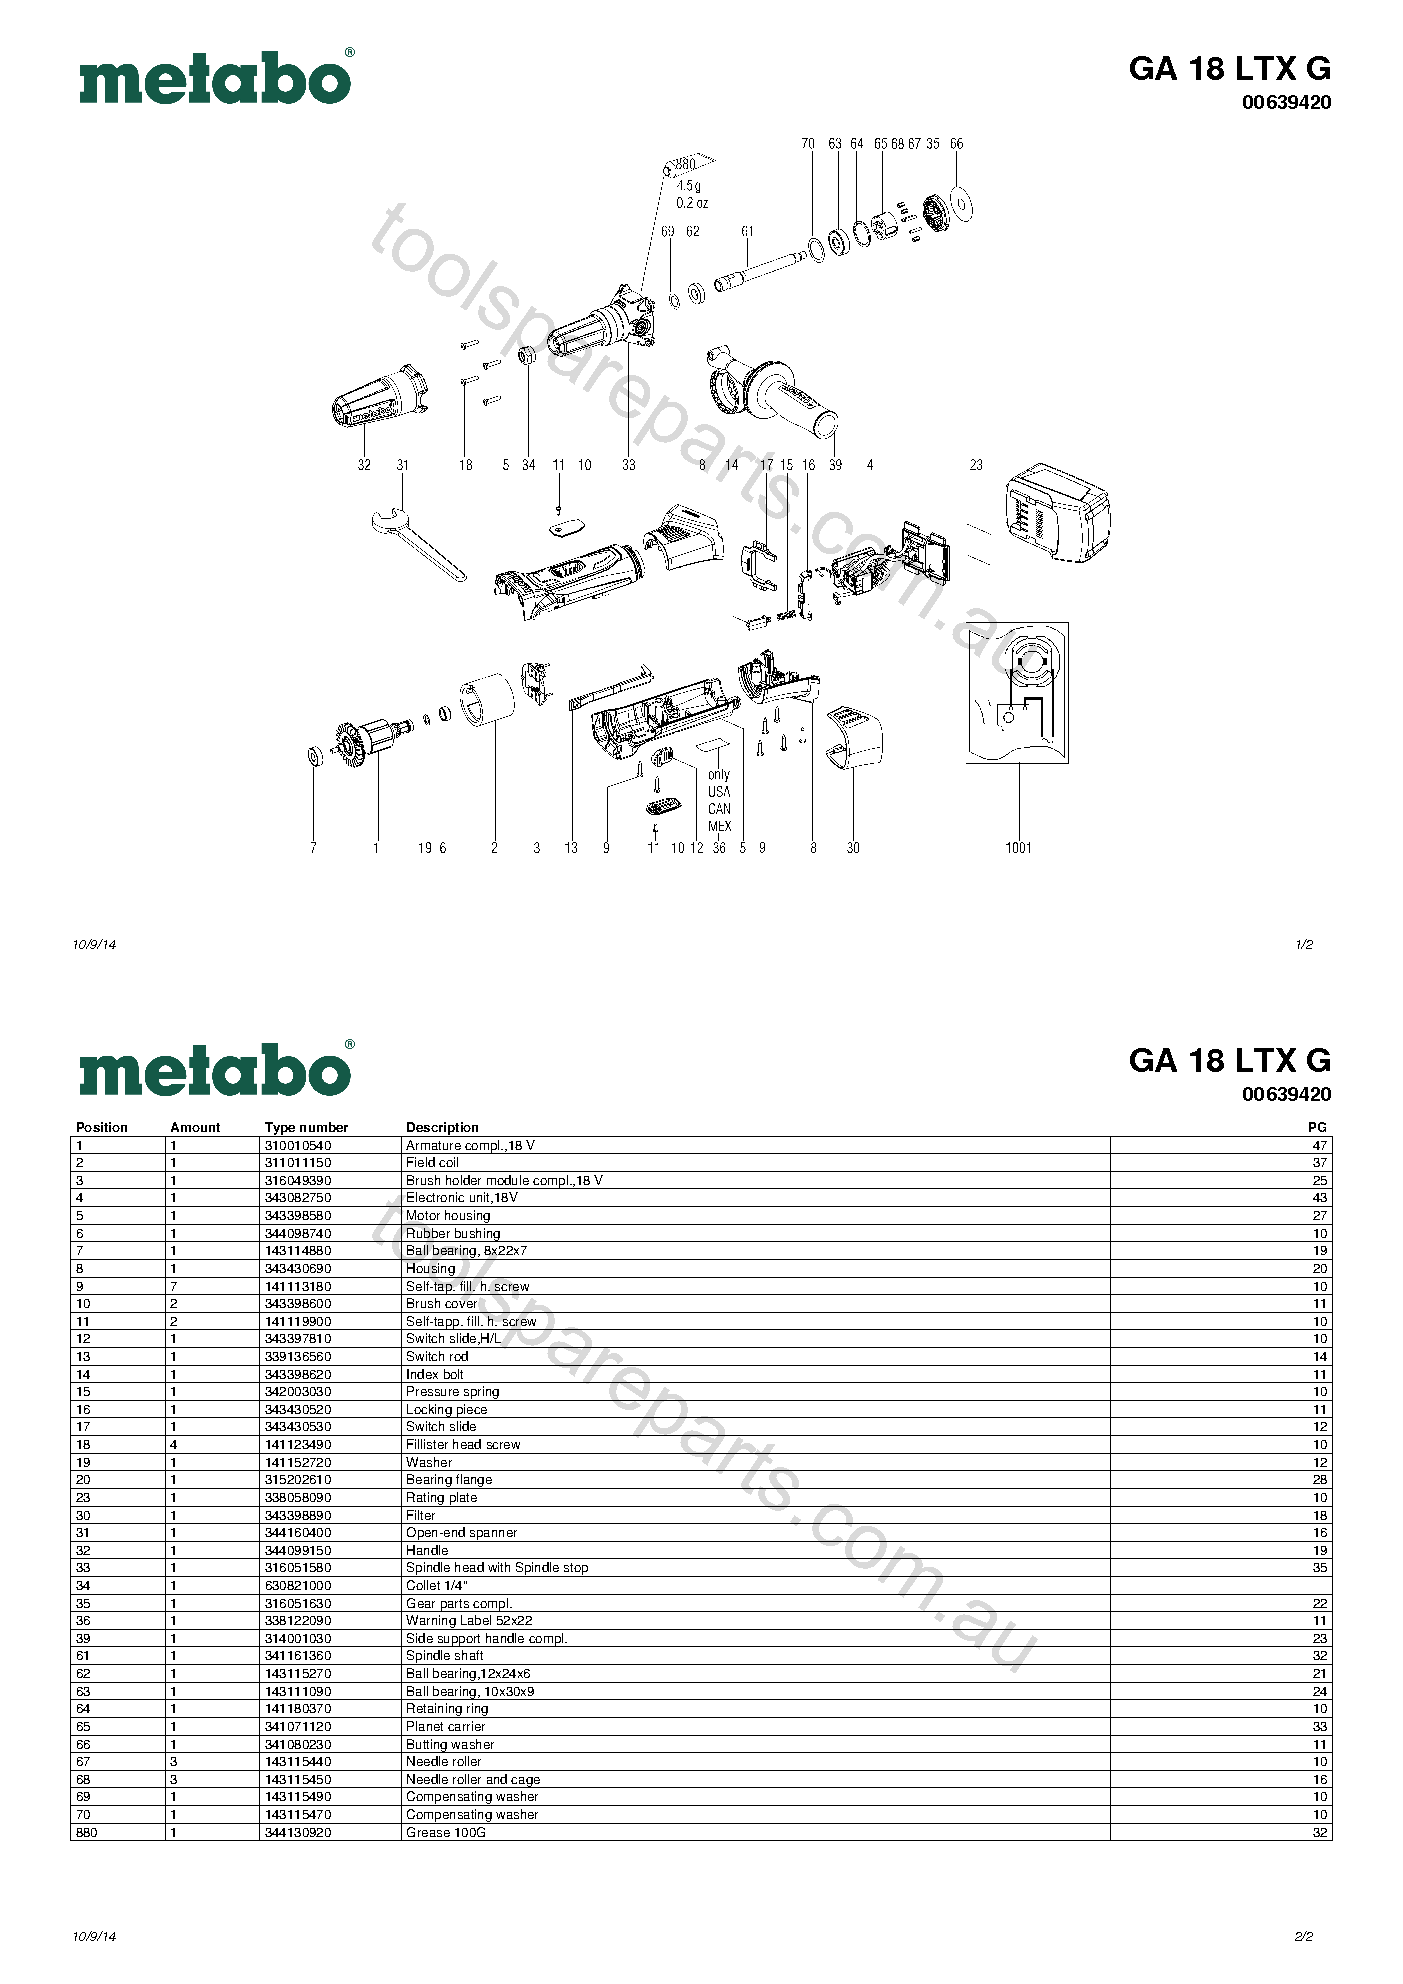 Metabo GA 18 LTX G 00639420  Diagram 1